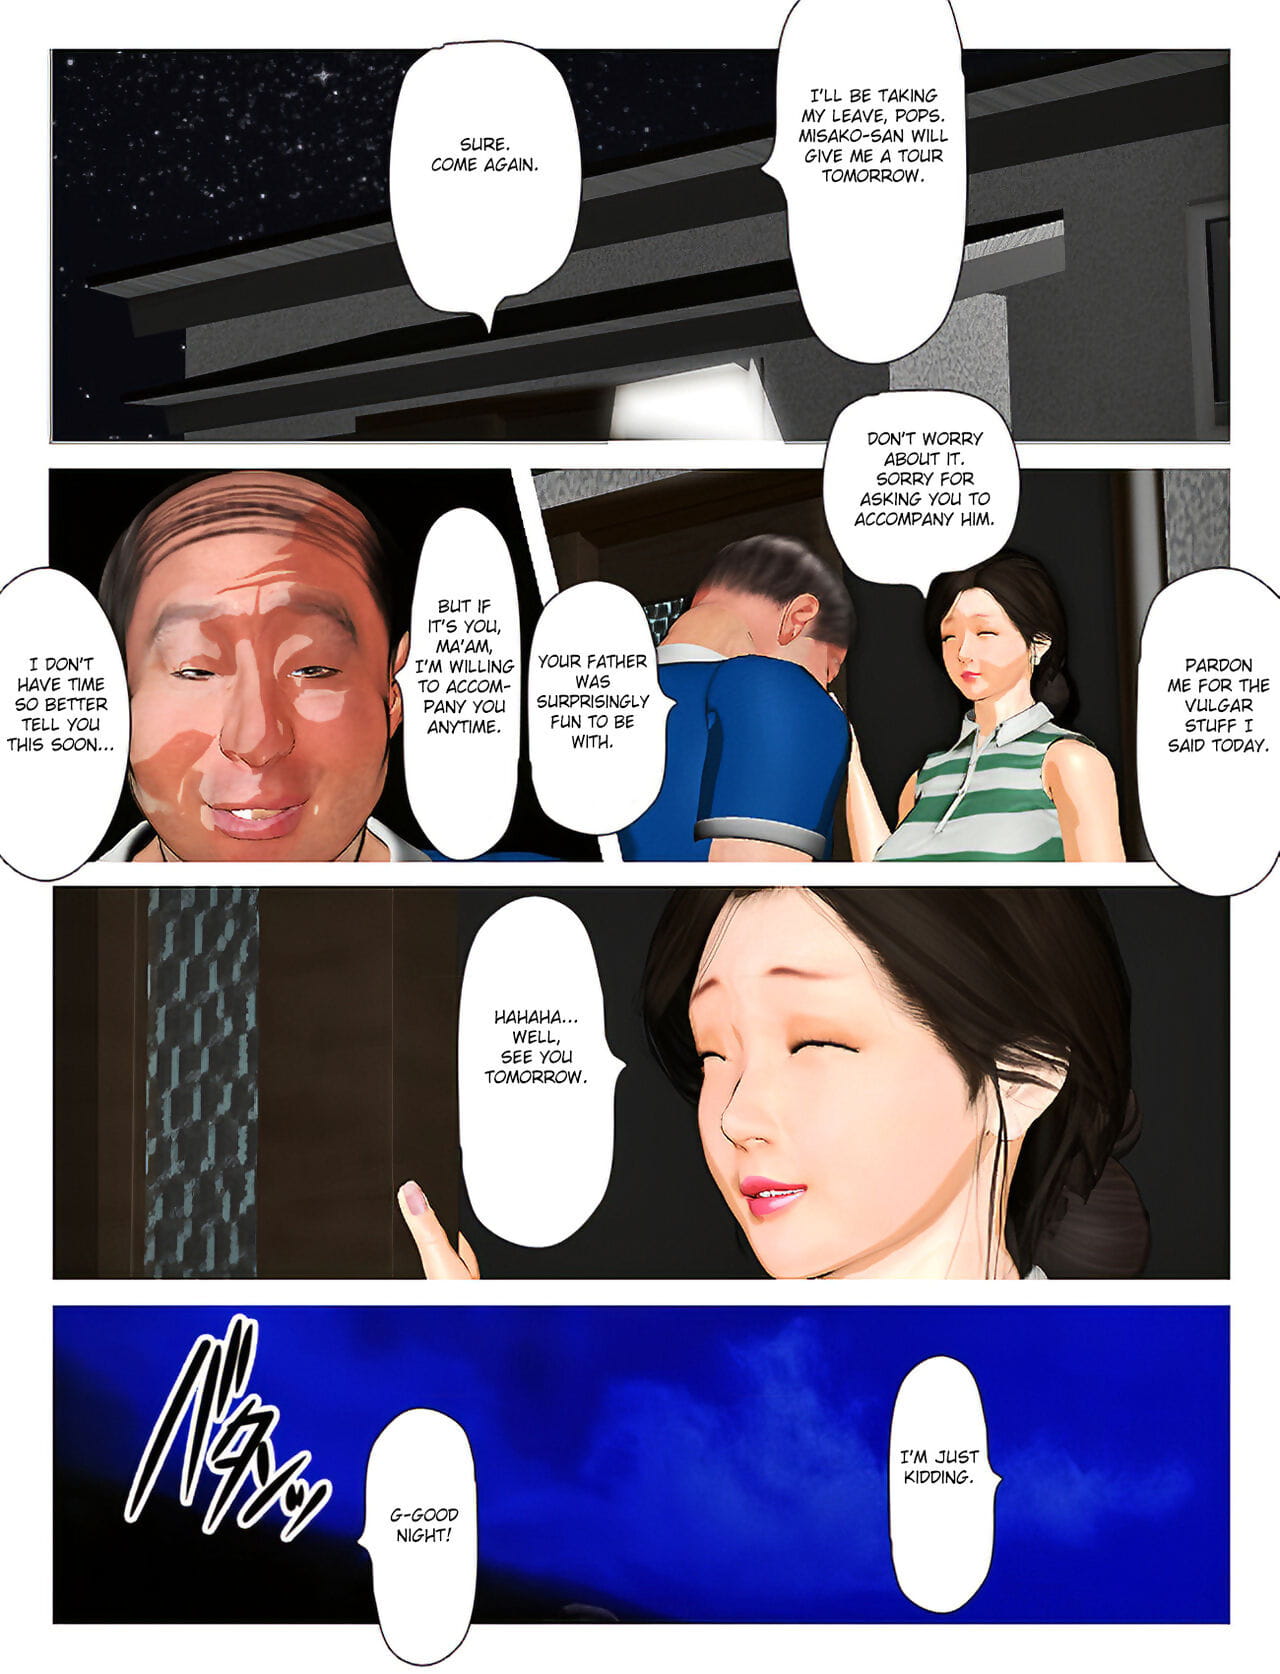 Kyou no misako San 2019:2 page 1